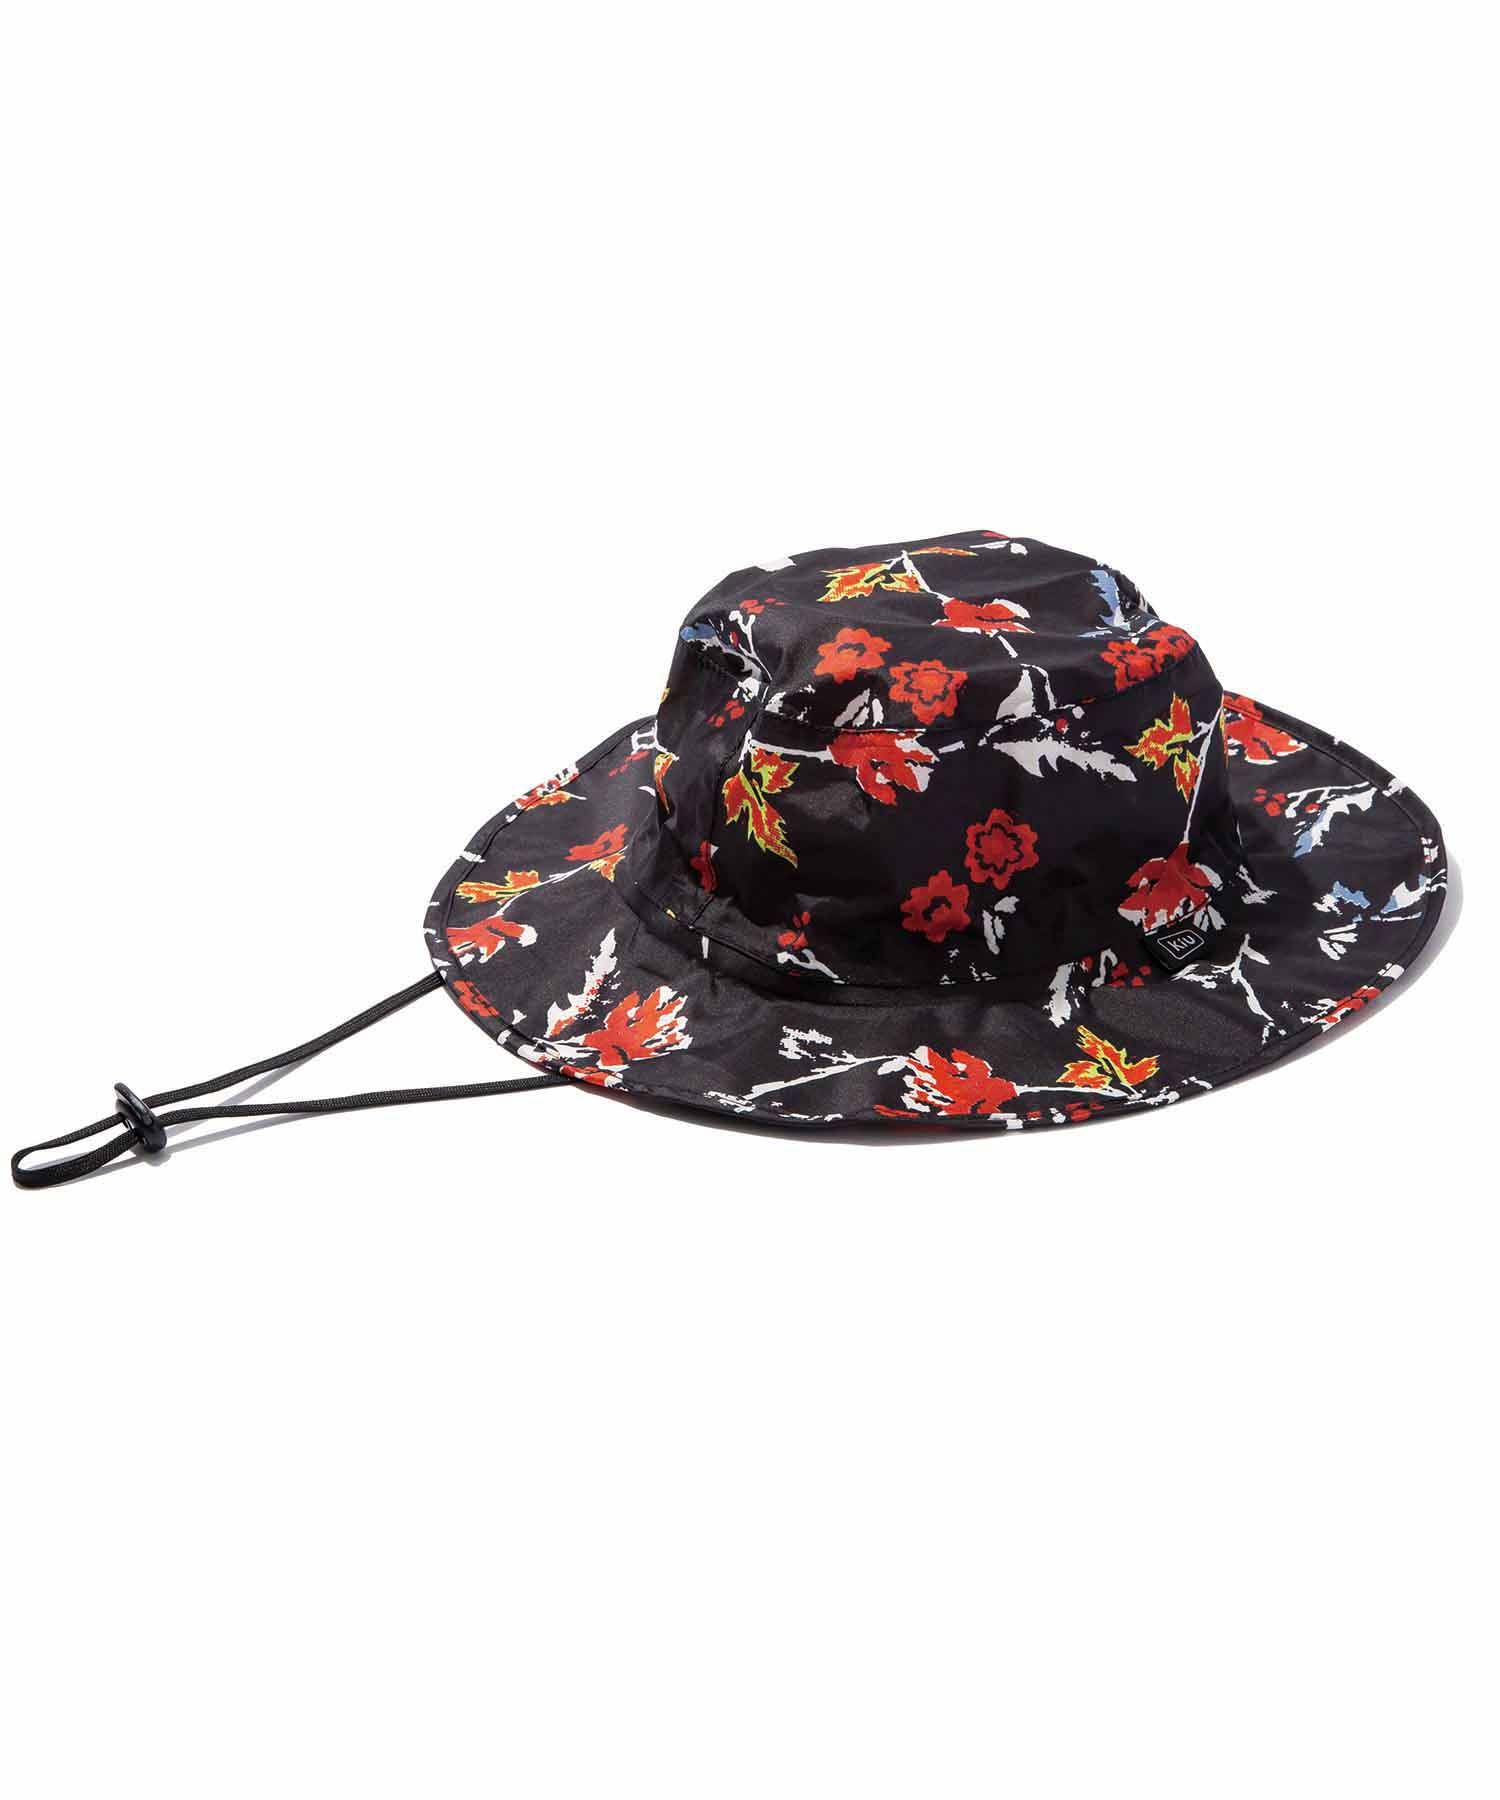 【KiU】 【KiU公式】帽子 UVu0026RAIN パッカブルサファリハット はっ水防水 UVカット 晴雨兼用 メンズ レディース ユニセックス ゴブラン ONESIZE ダブリュピーシー ハット 帽子